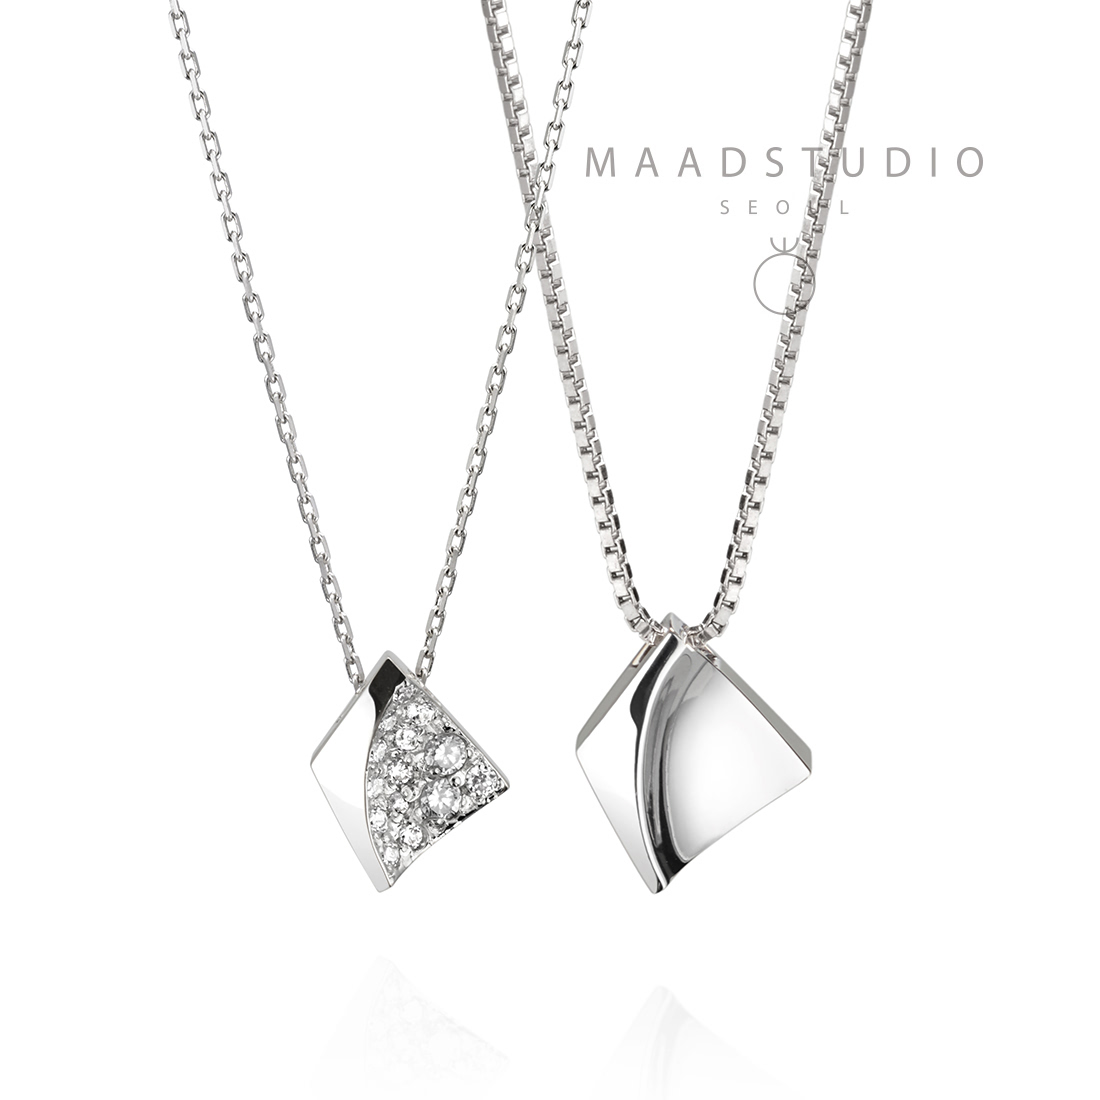 Crystalloid couple pendant Set (M&S) 14k White gold CZ & flat